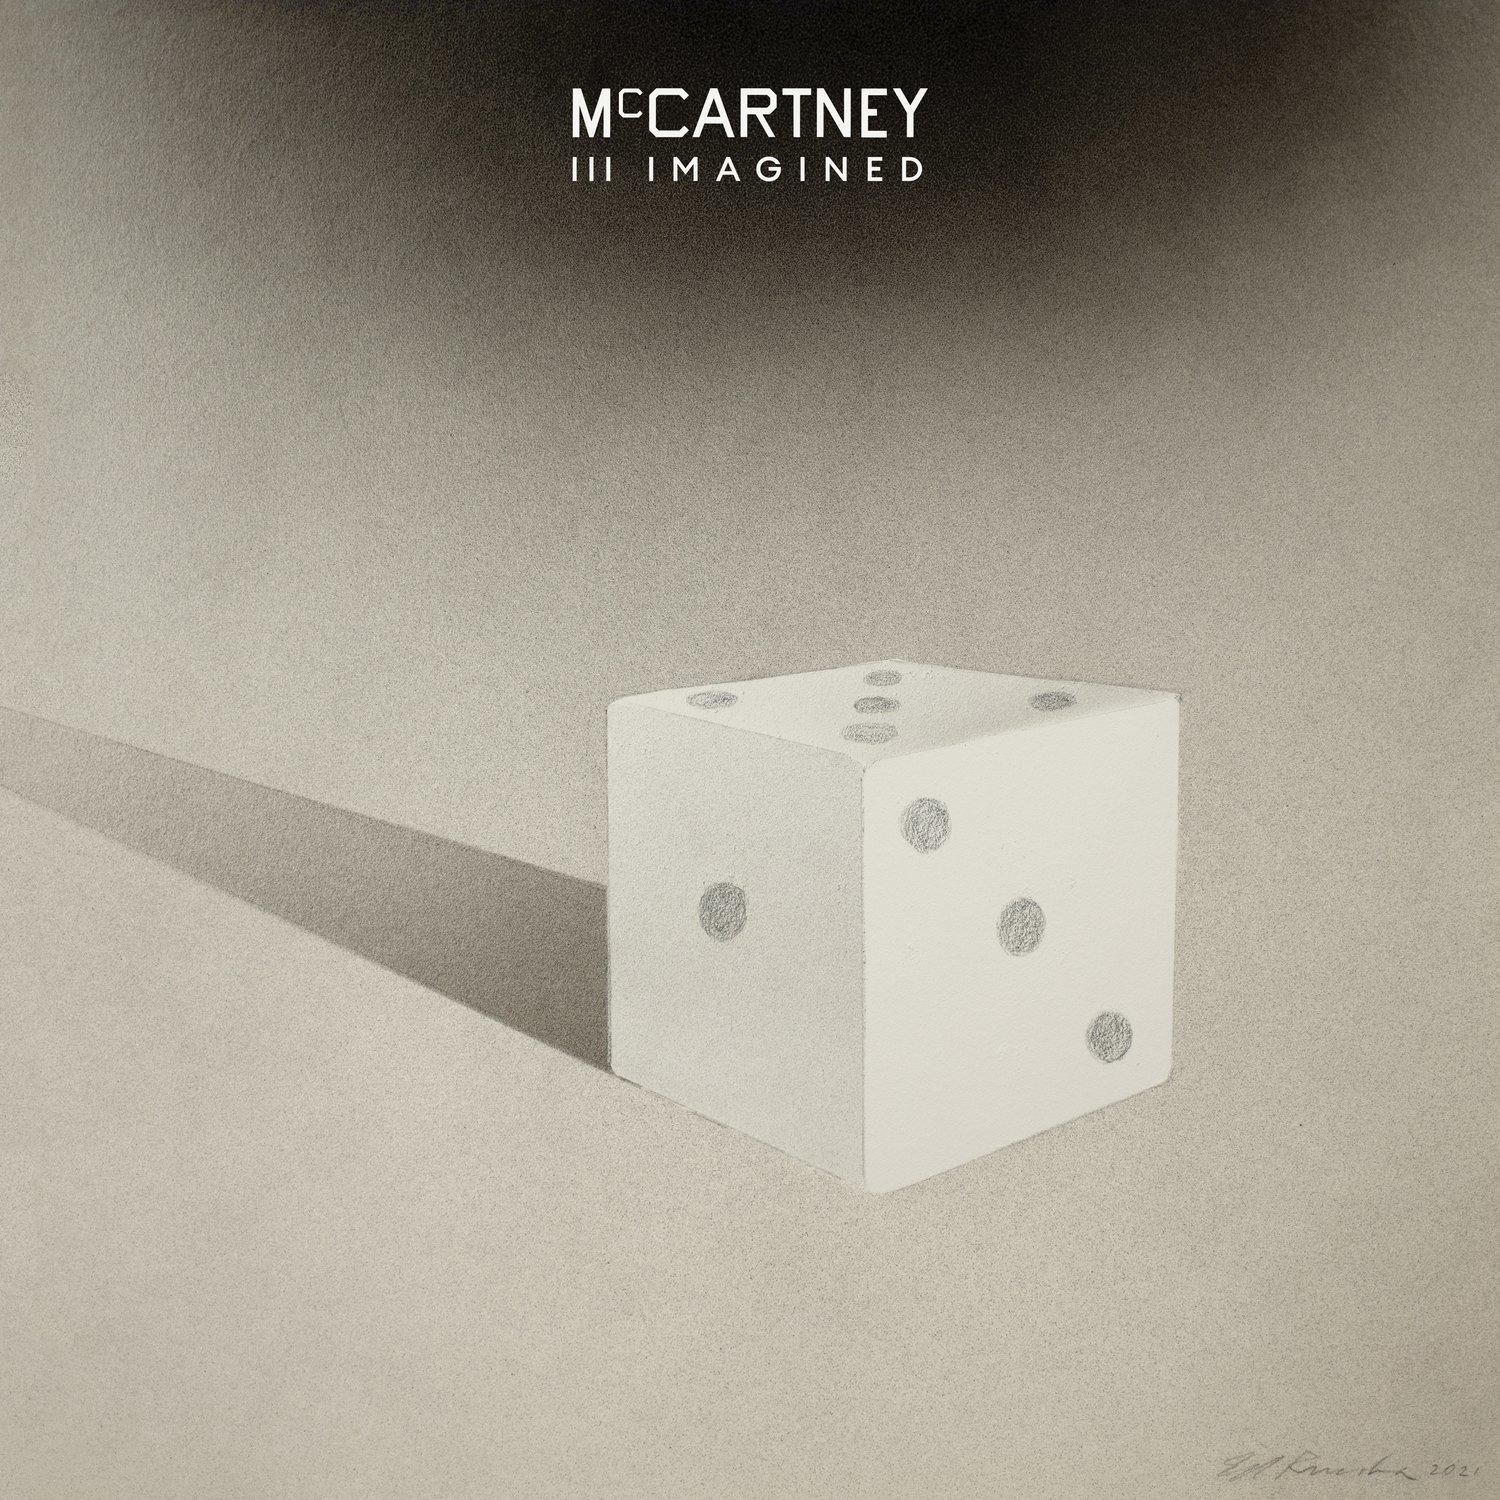 Paul McCartney - McCartney III Imagined - (Vinyl) (2LP)